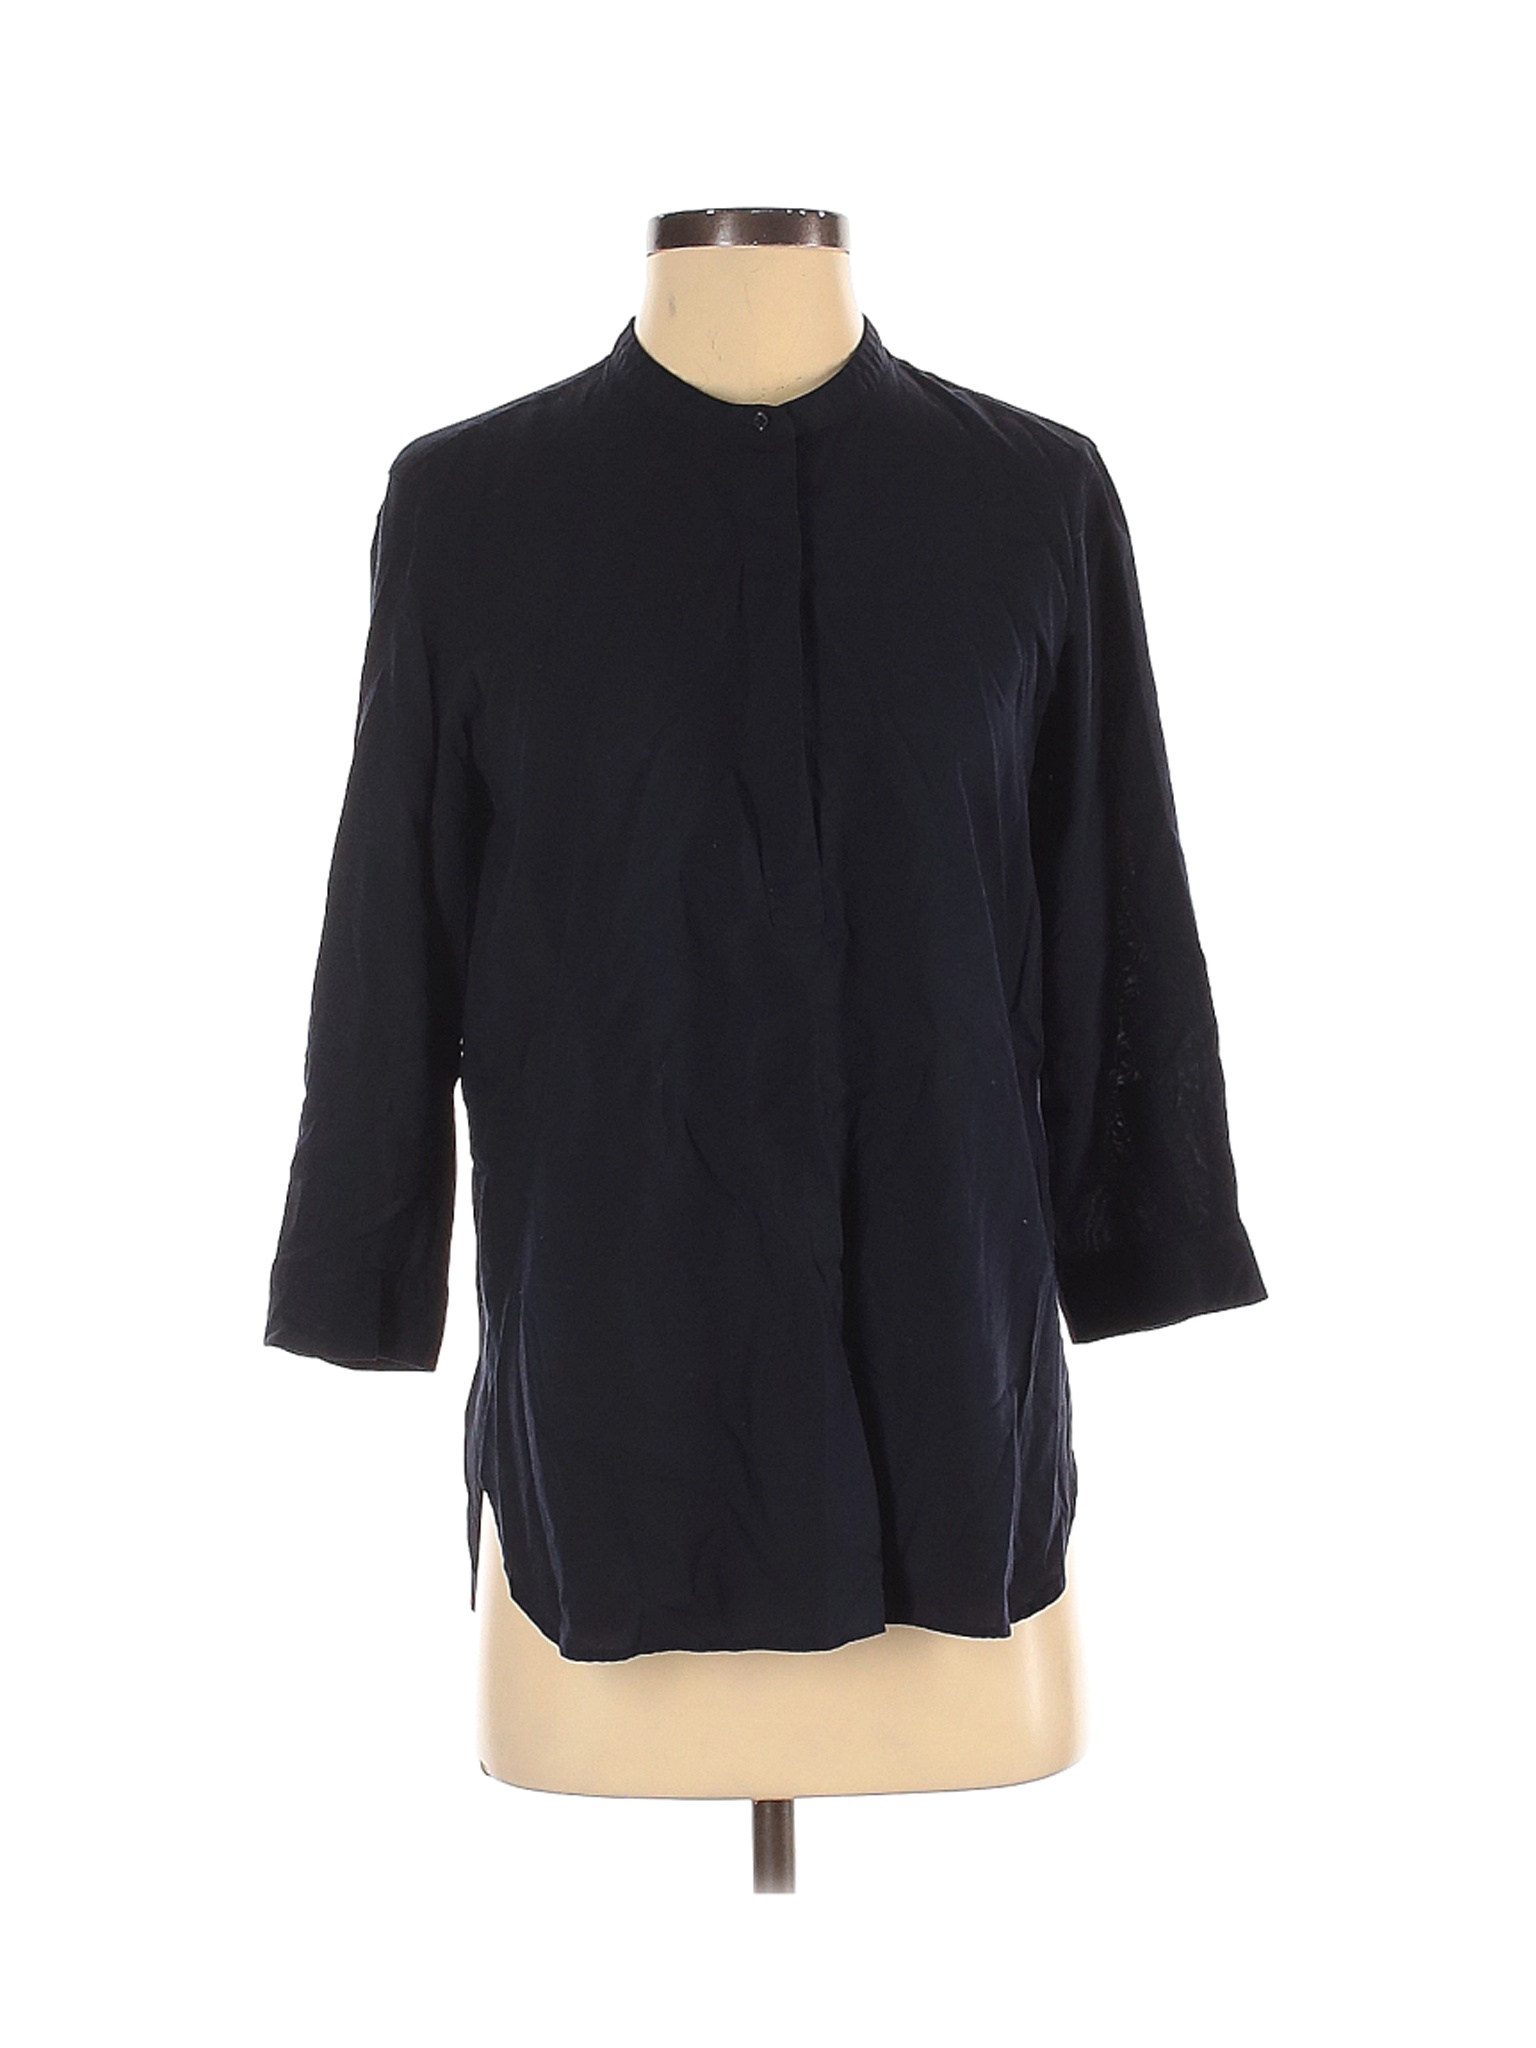 Uniqlo Women Black 3/4 Sleeve Blouse S | eBay